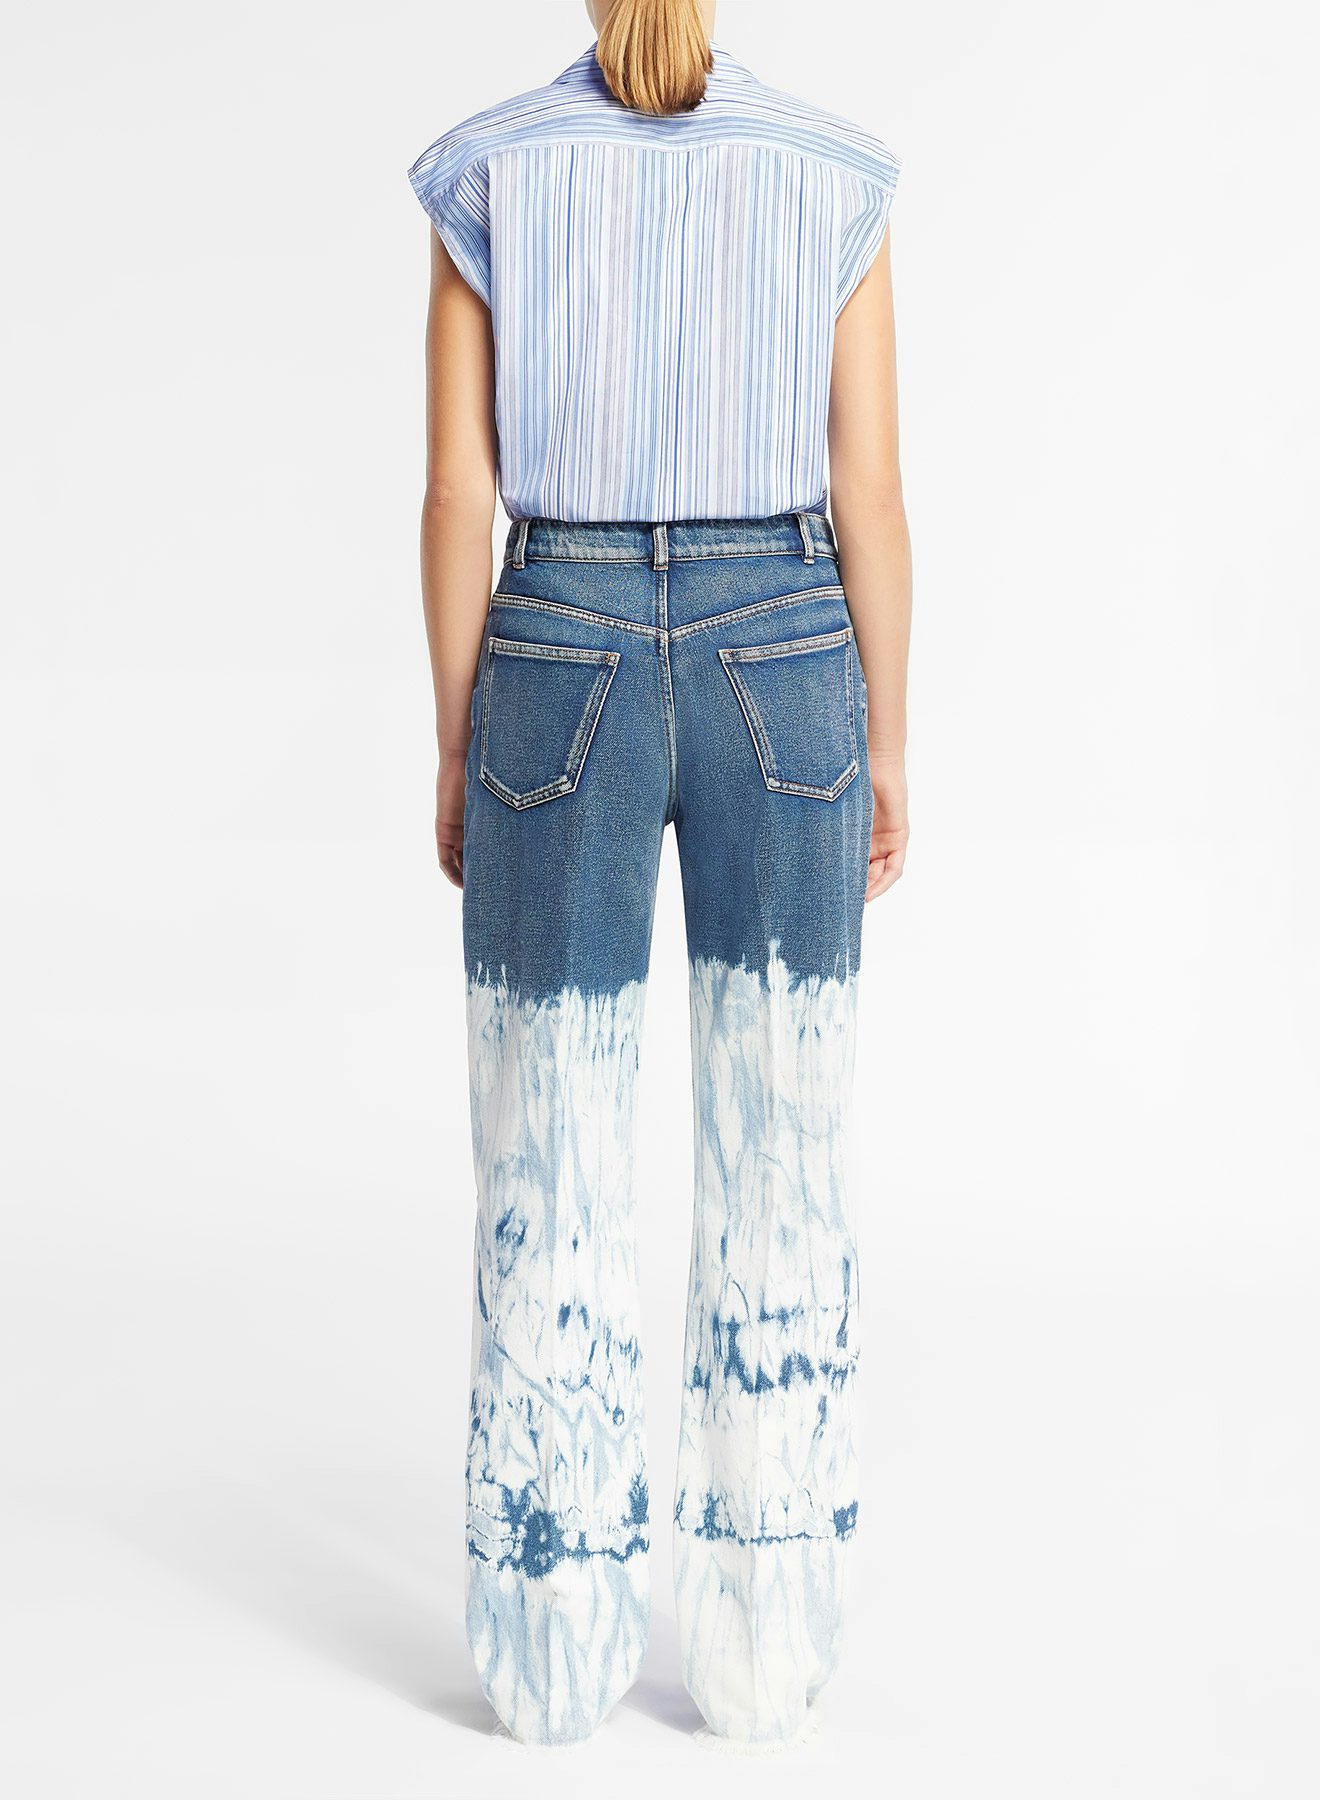 Sleeveless criss-cross blouse with blue stripes - Nina Ricci